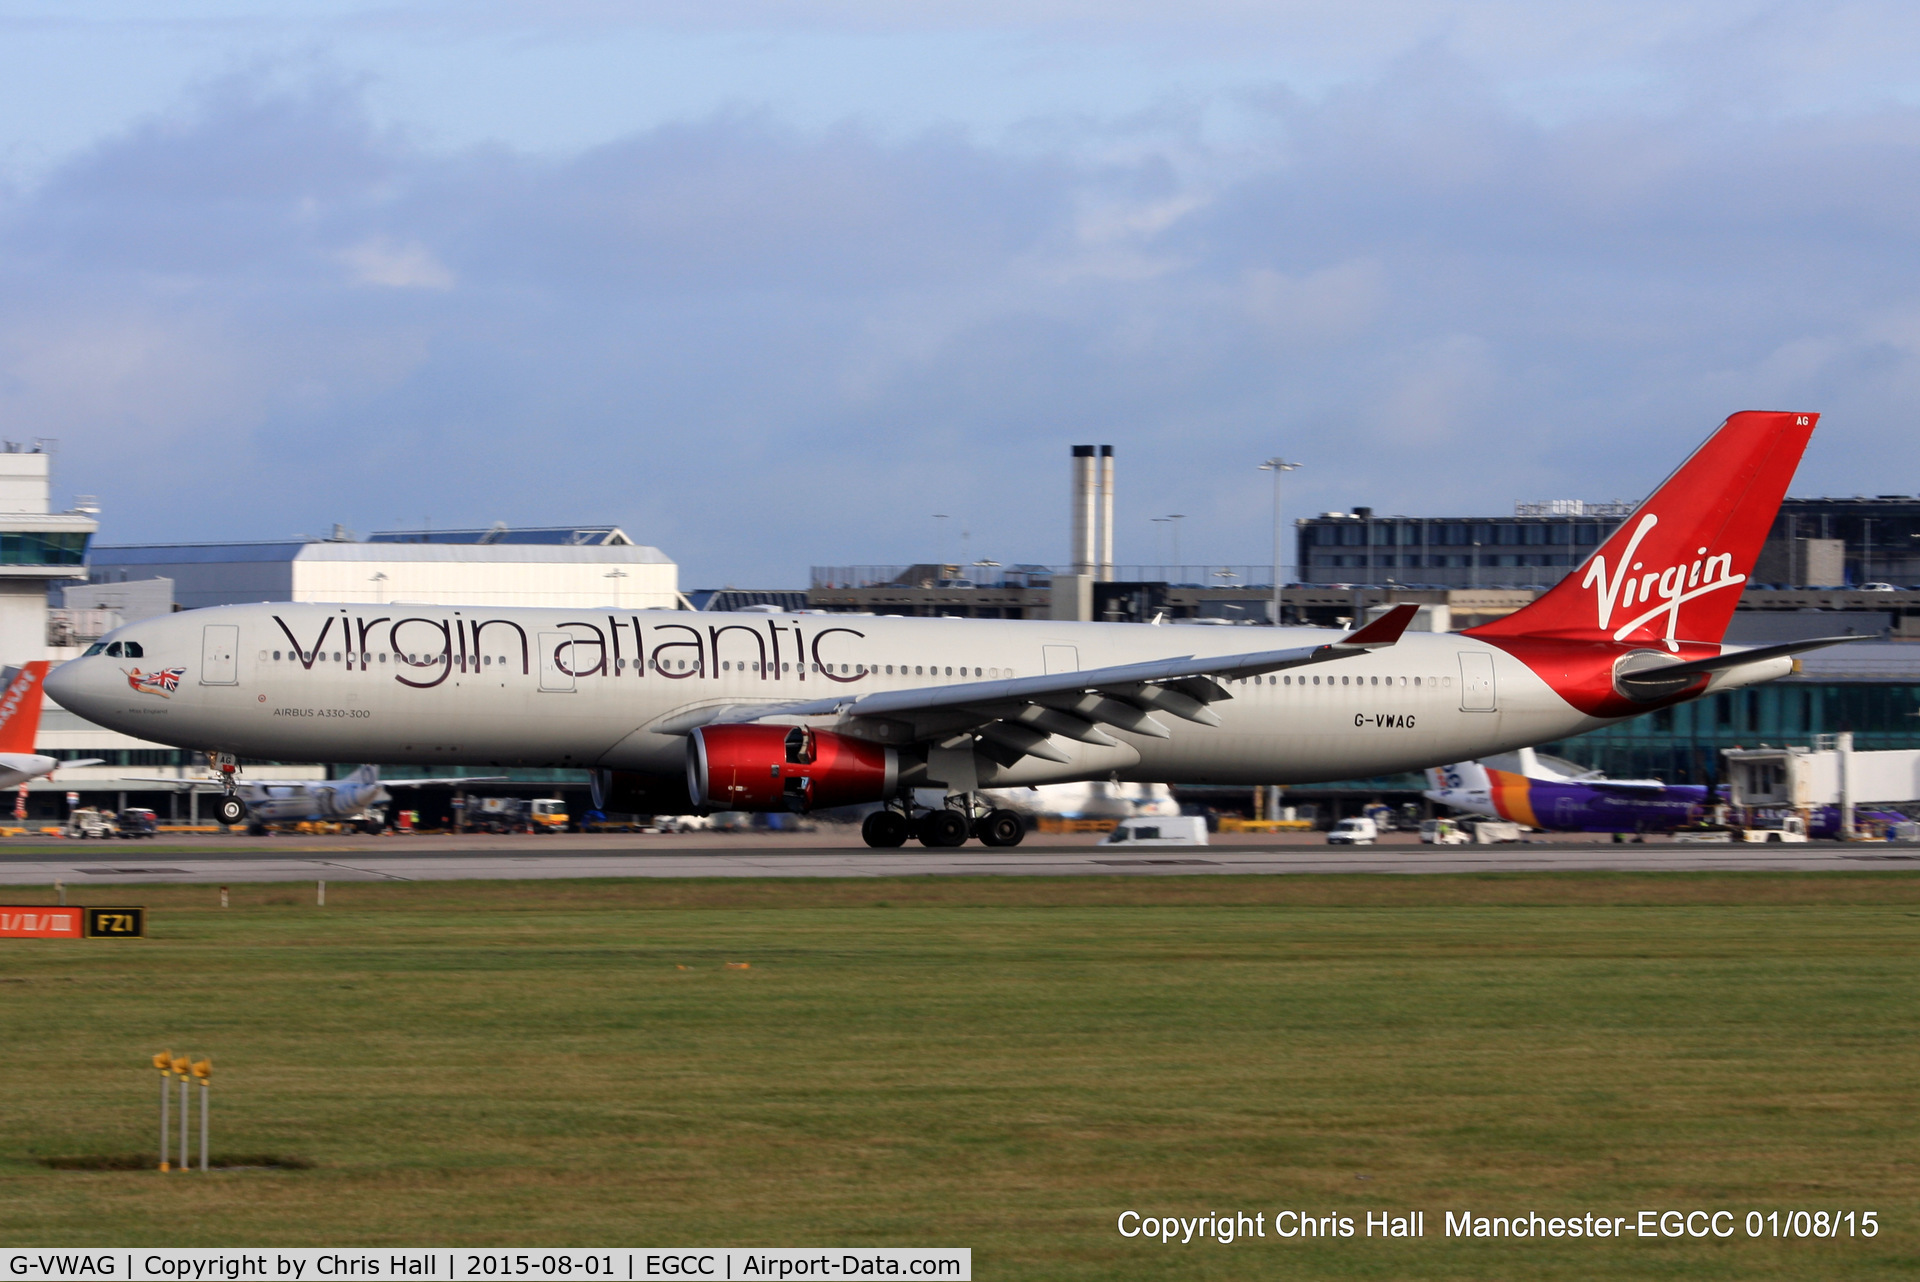 G-VWAG, 2012 Airbus A330-343X C/N 1341, Virgin Atlantic